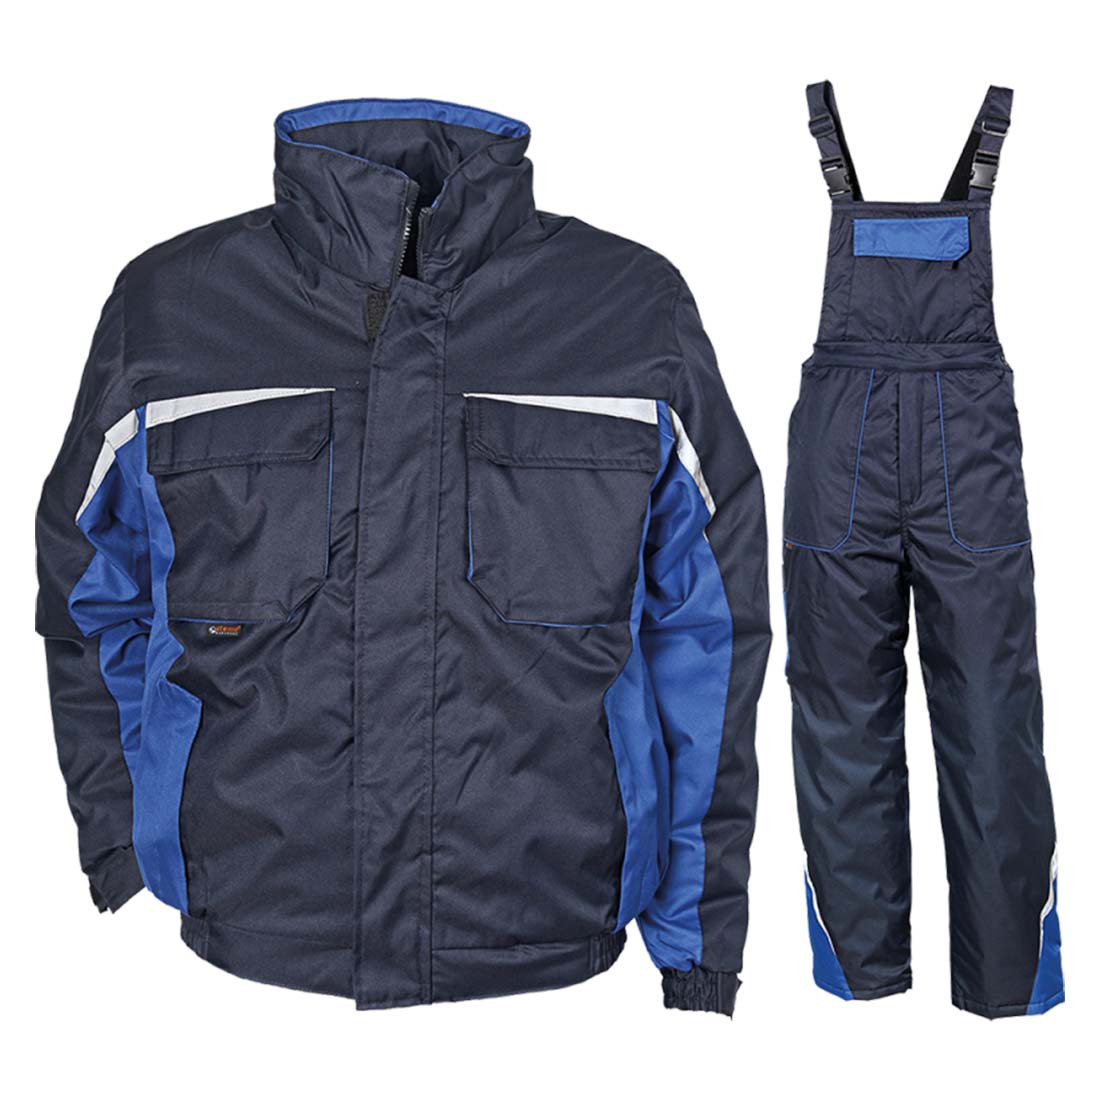 Kastor Winter Suit - Safetywear